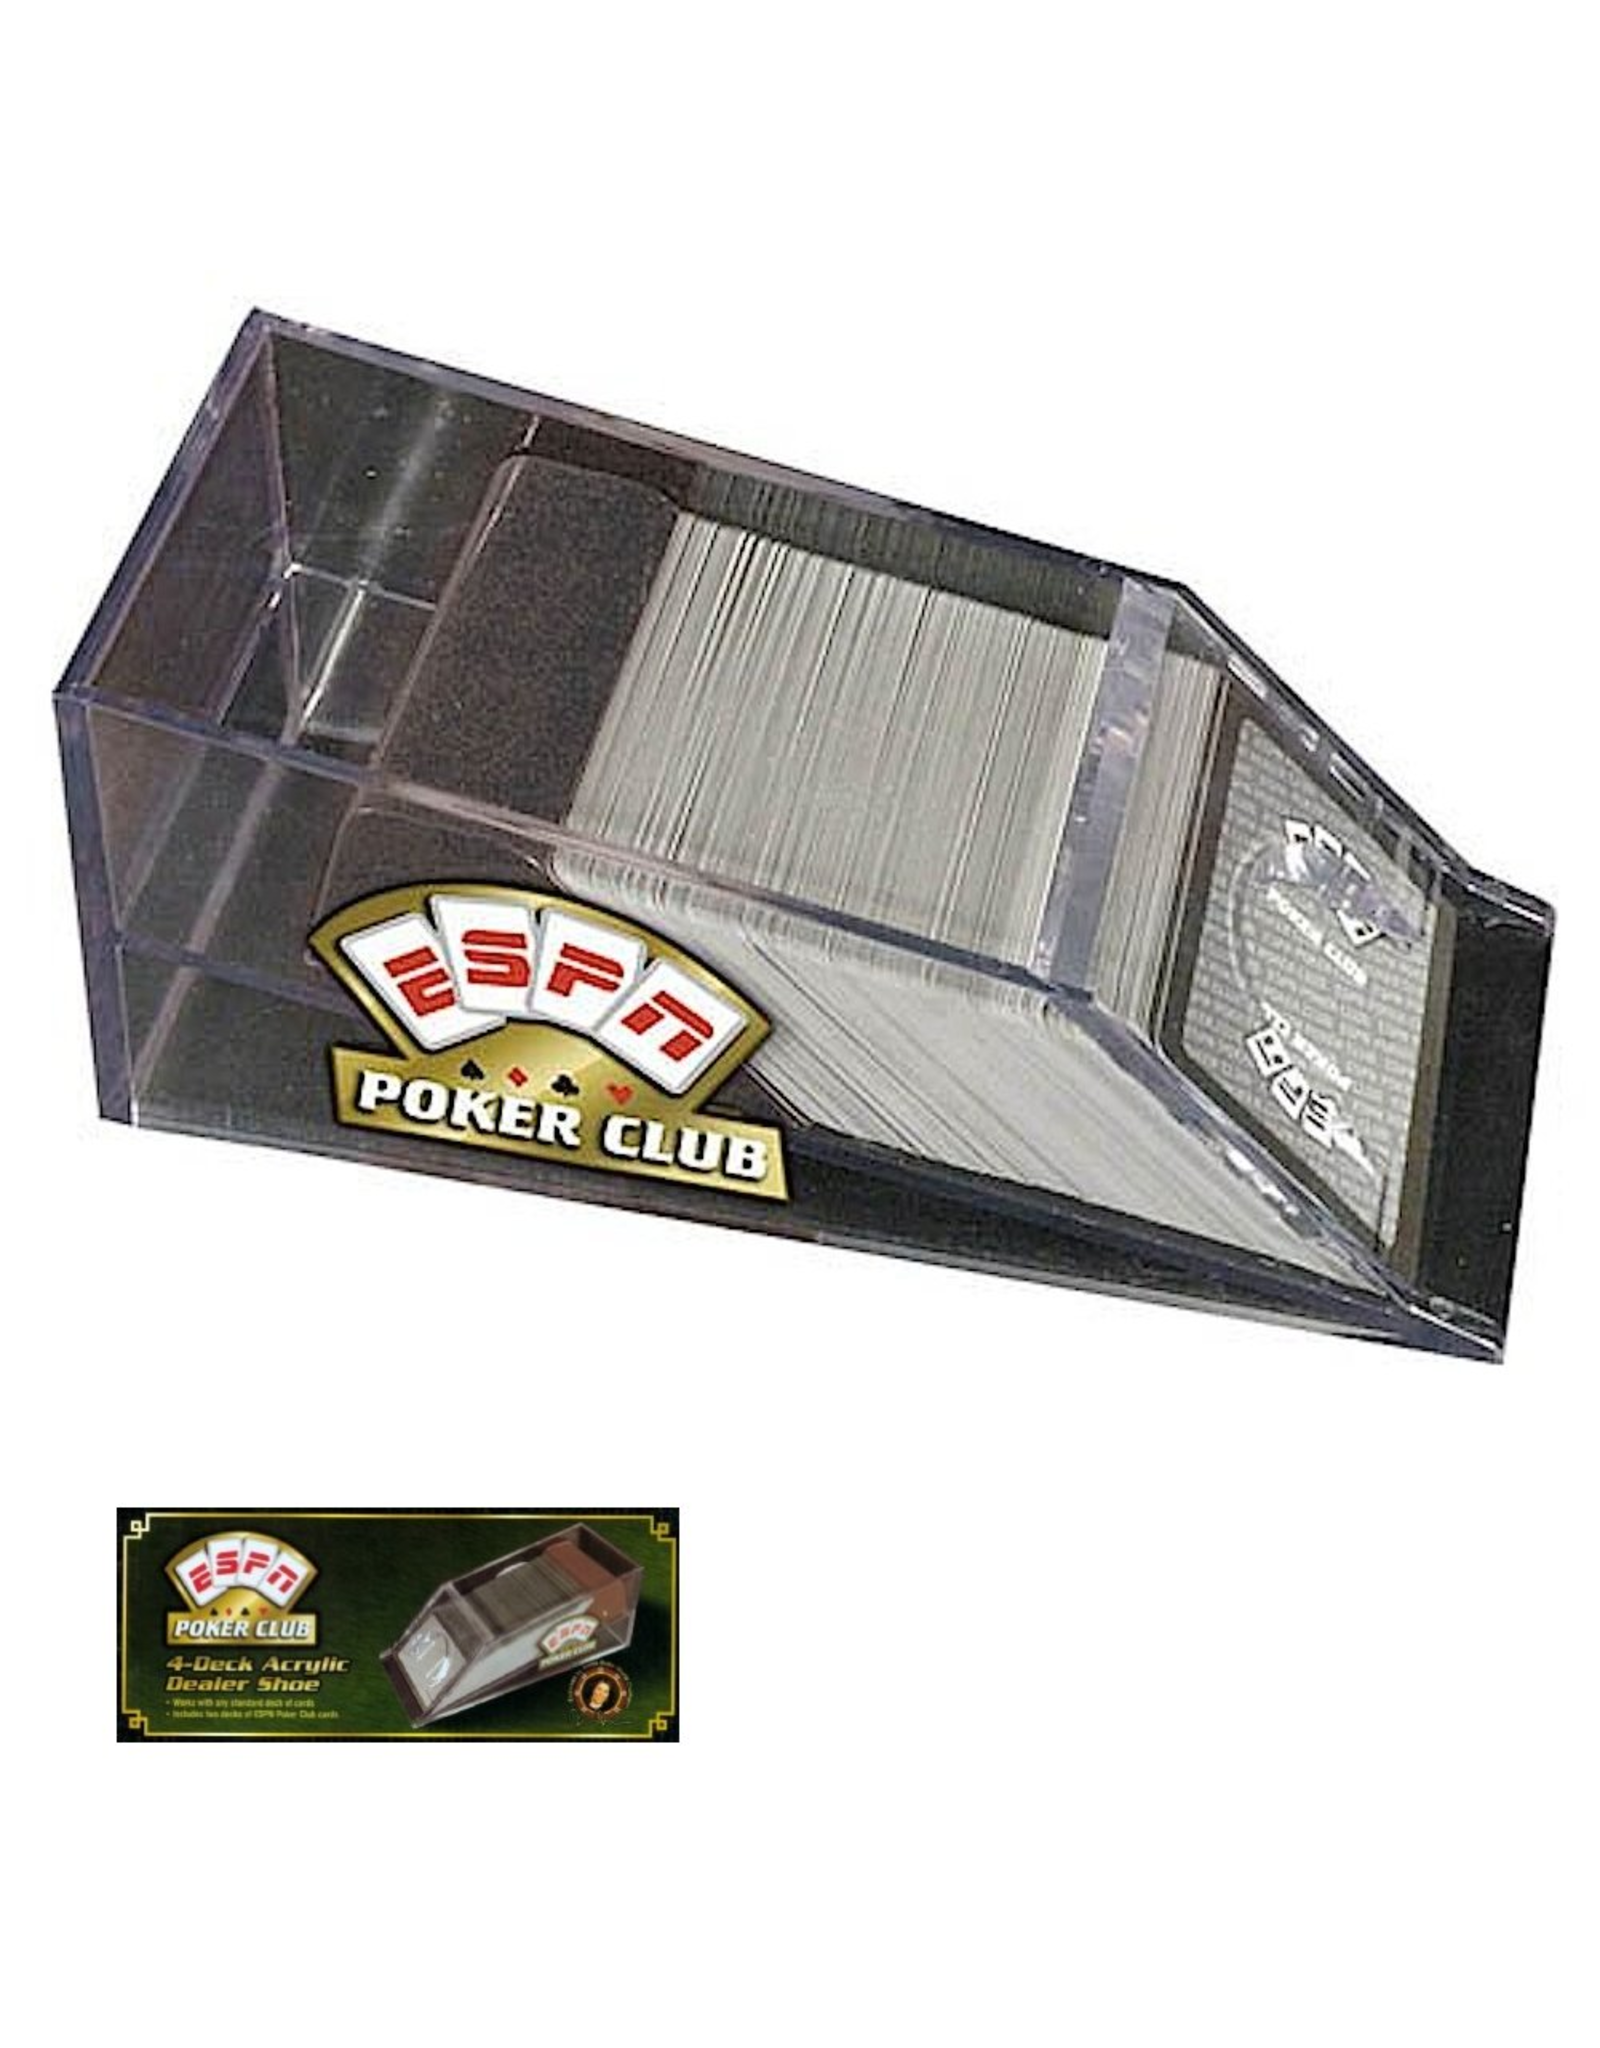 ESPN Poker Club Card Games 4-Deck Acrylic Dealer Shoe